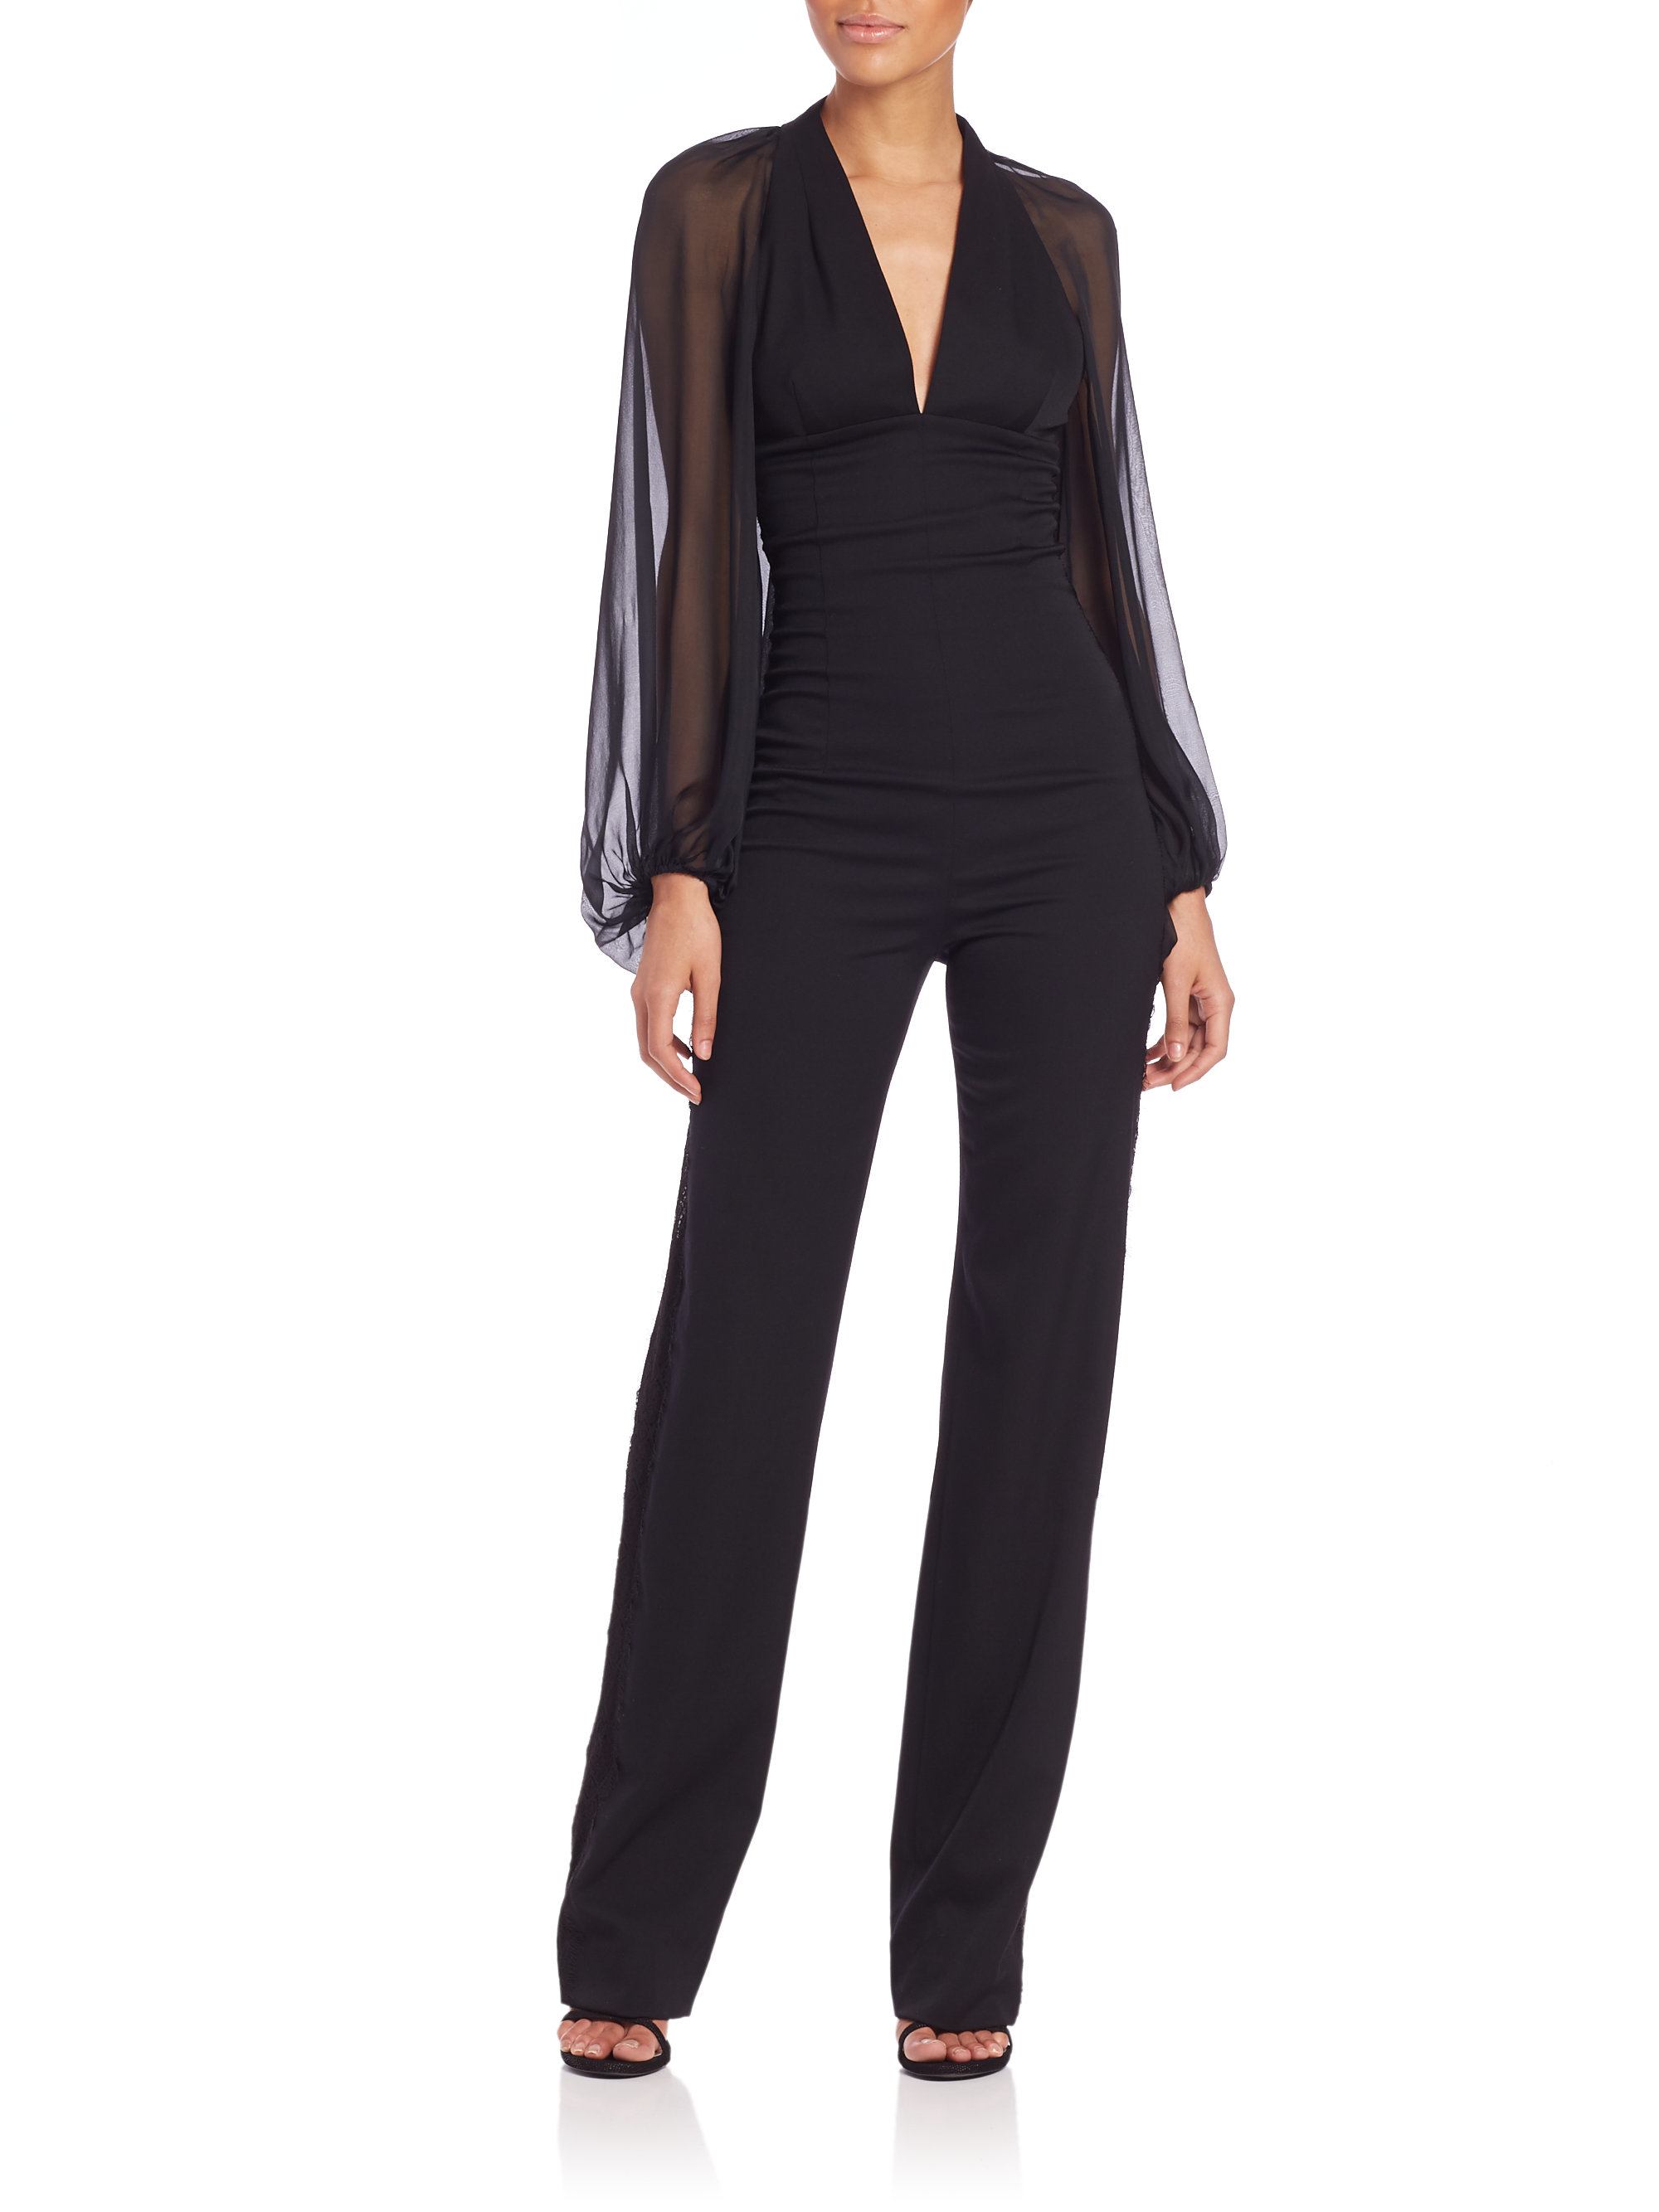 Lyst - Tamara Mellon Tuxedo Jumpsuit in Black